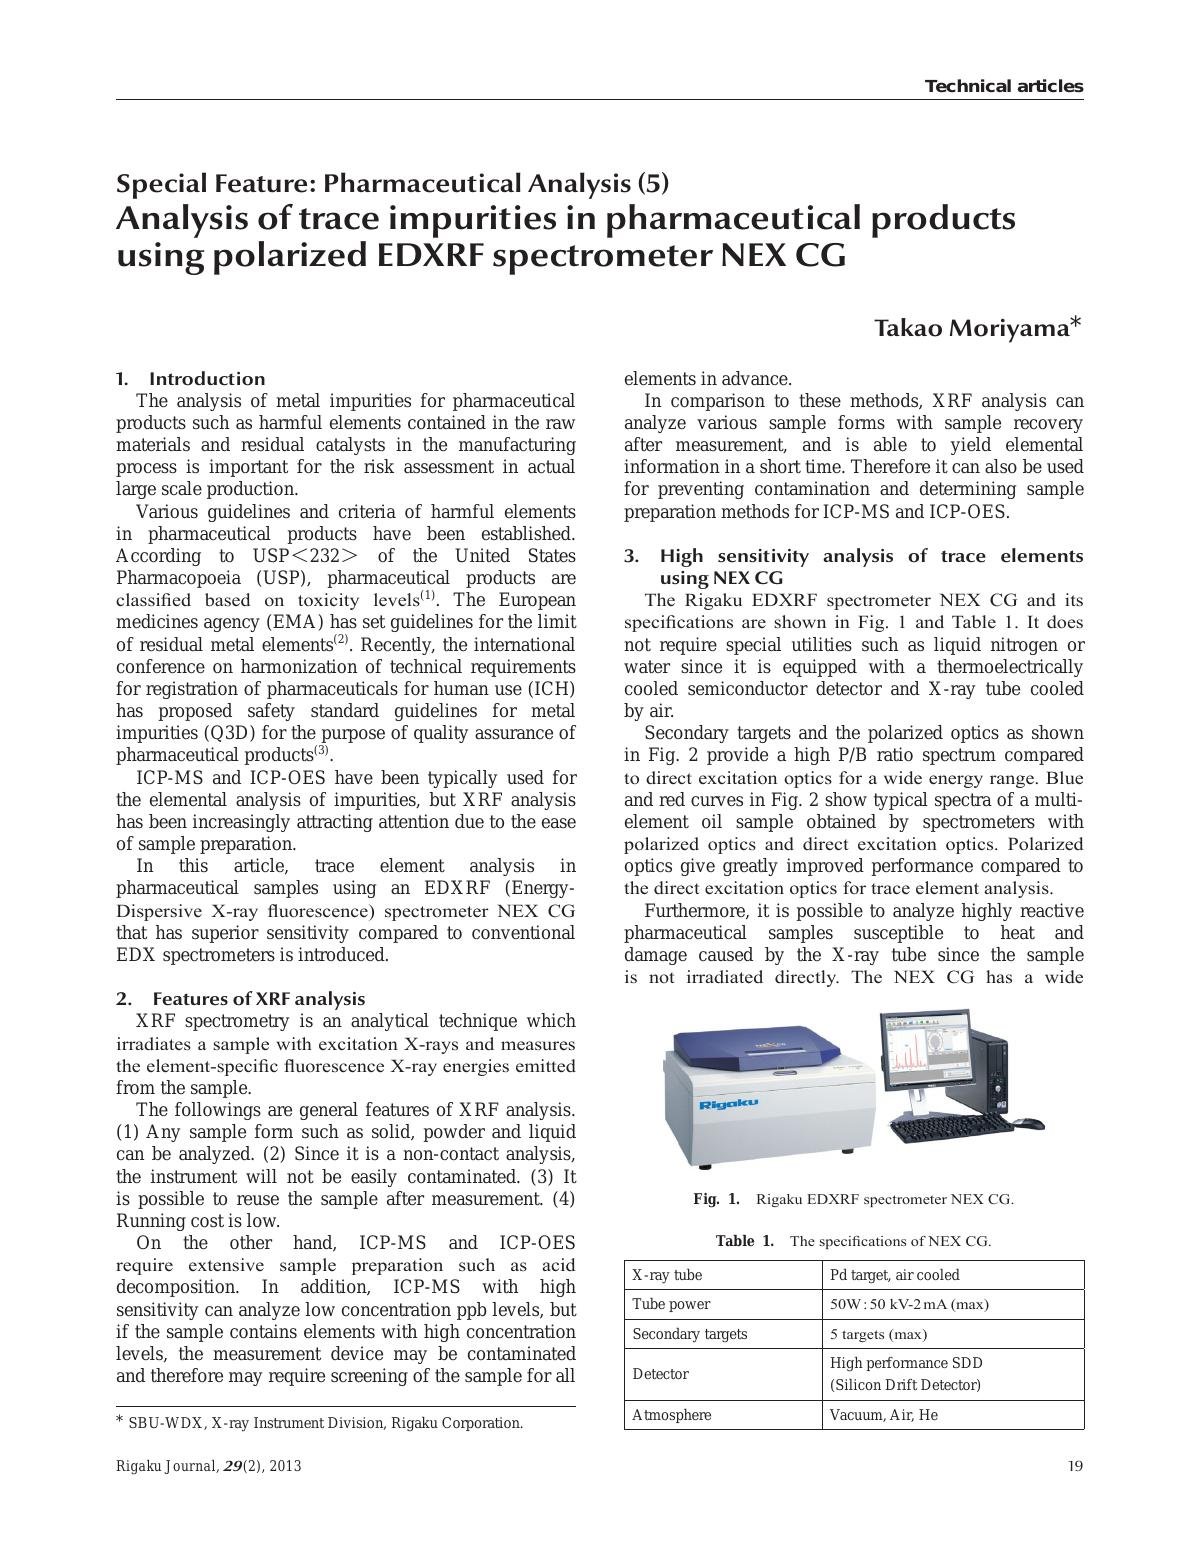 Analysis of tract impurities in pharmaceutical products using polarized EDXRF spectrometer NEX CG